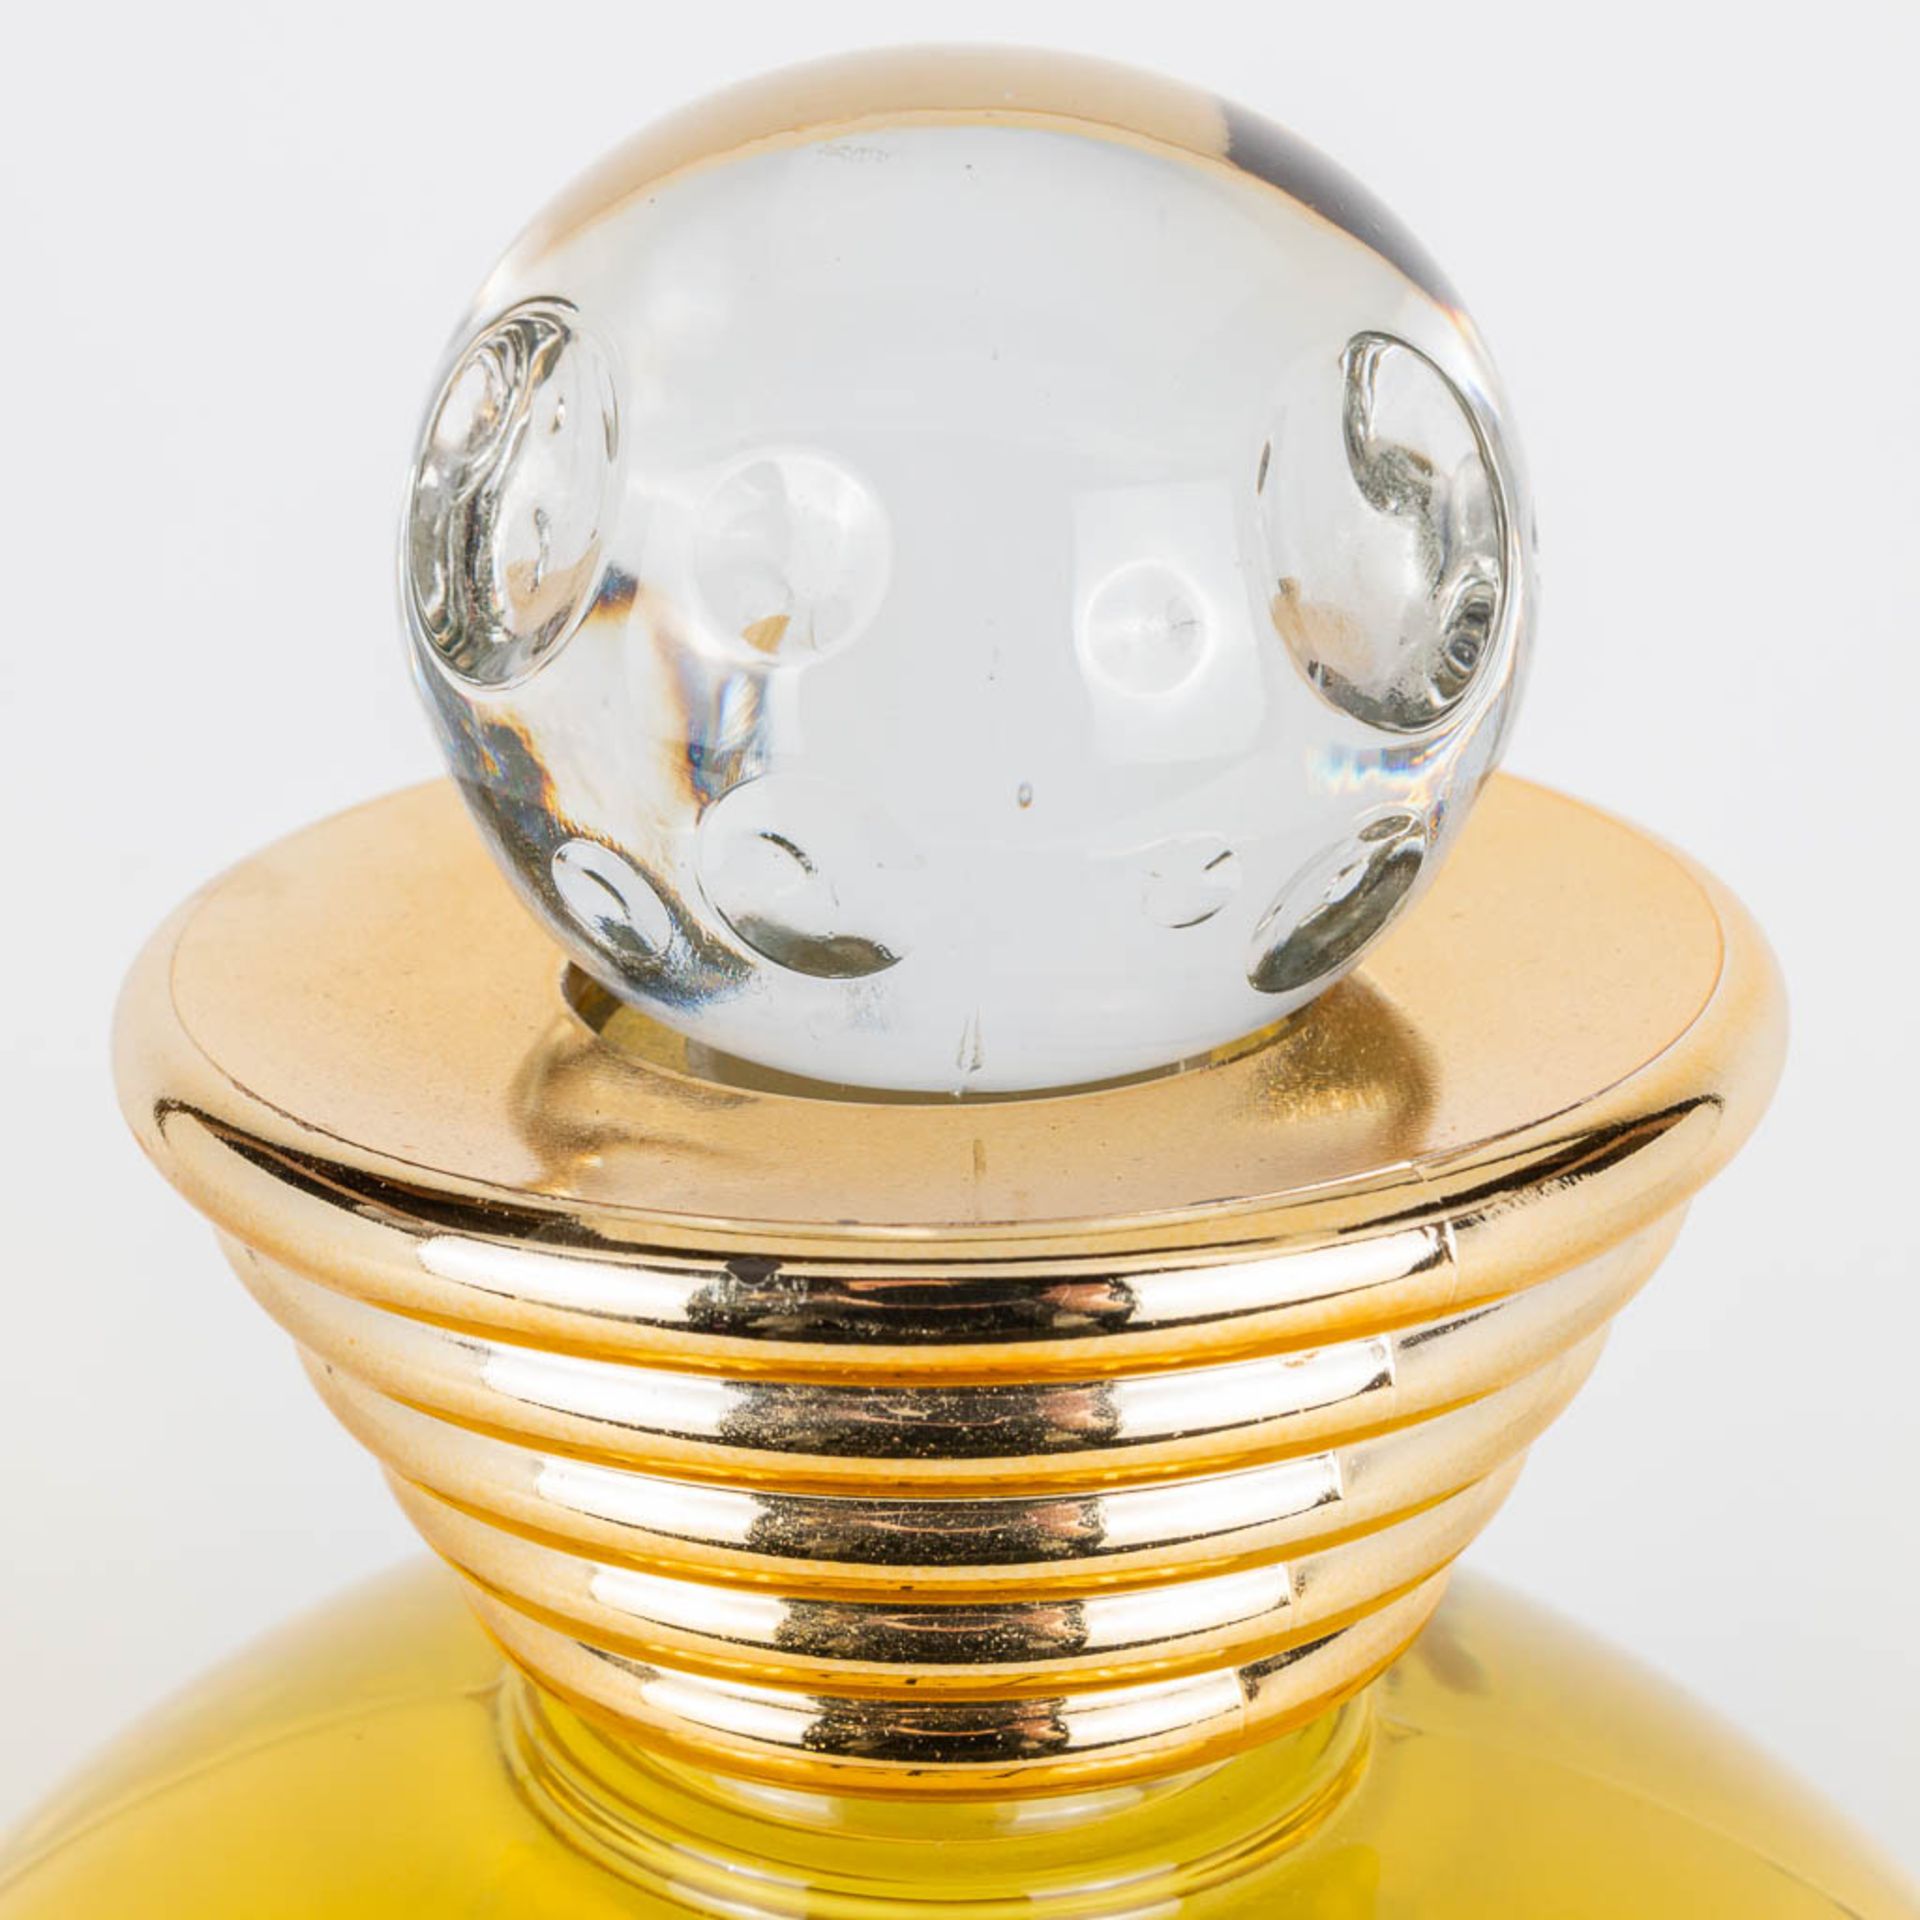 A large Dummy Perfume bottle 'La Dolce Vita' by Christian Dior. (35 x 24 cm) - Bild 8 aus 9